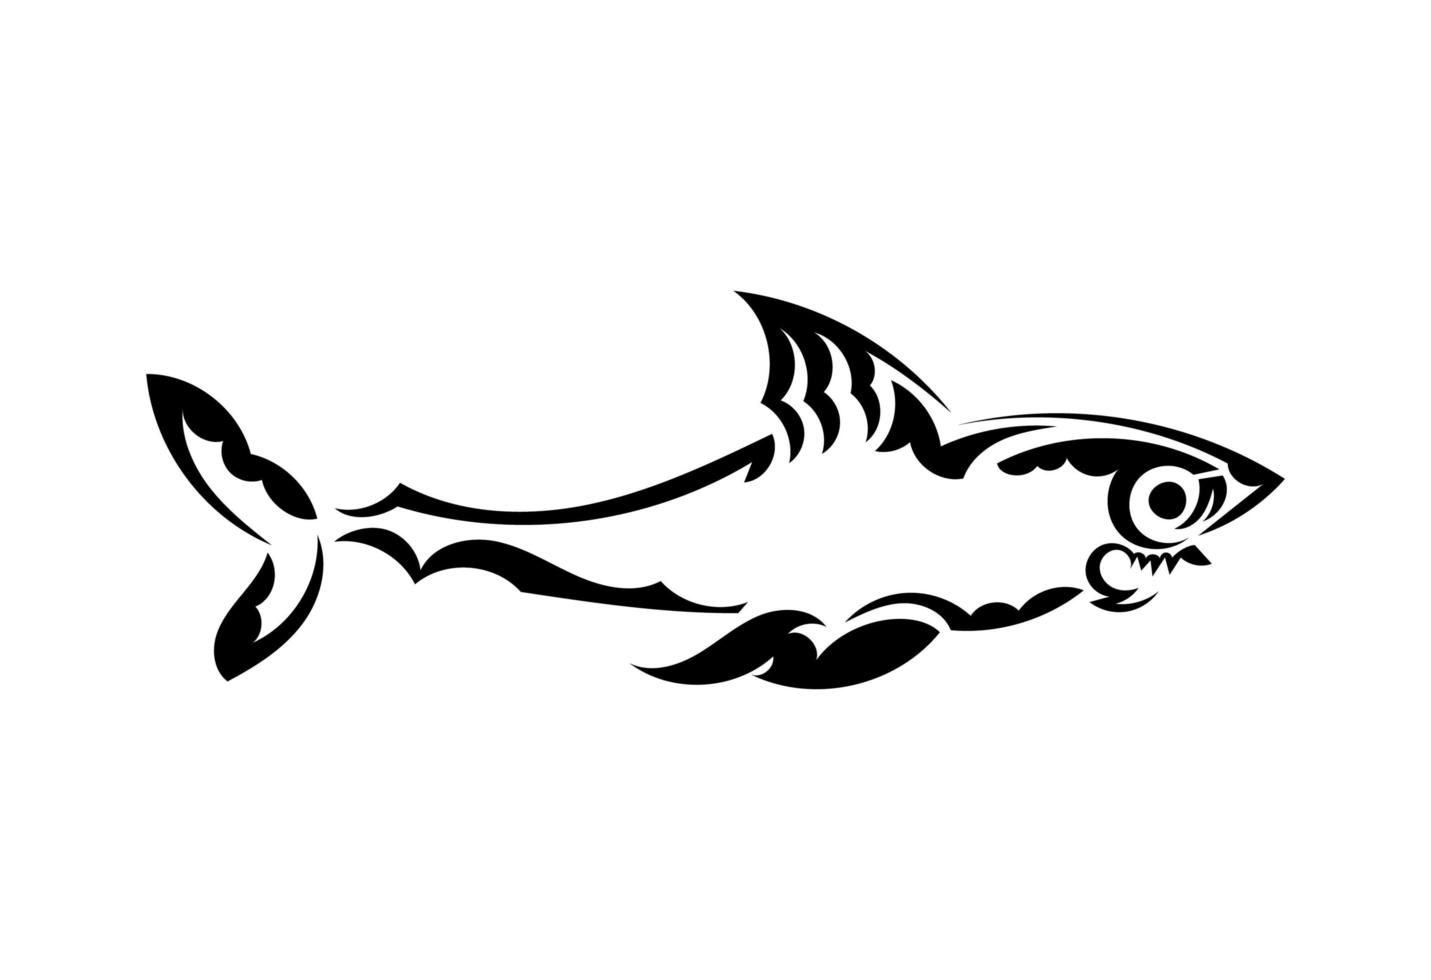 Shark tattoo in boho style. Isolated. Vector illustration